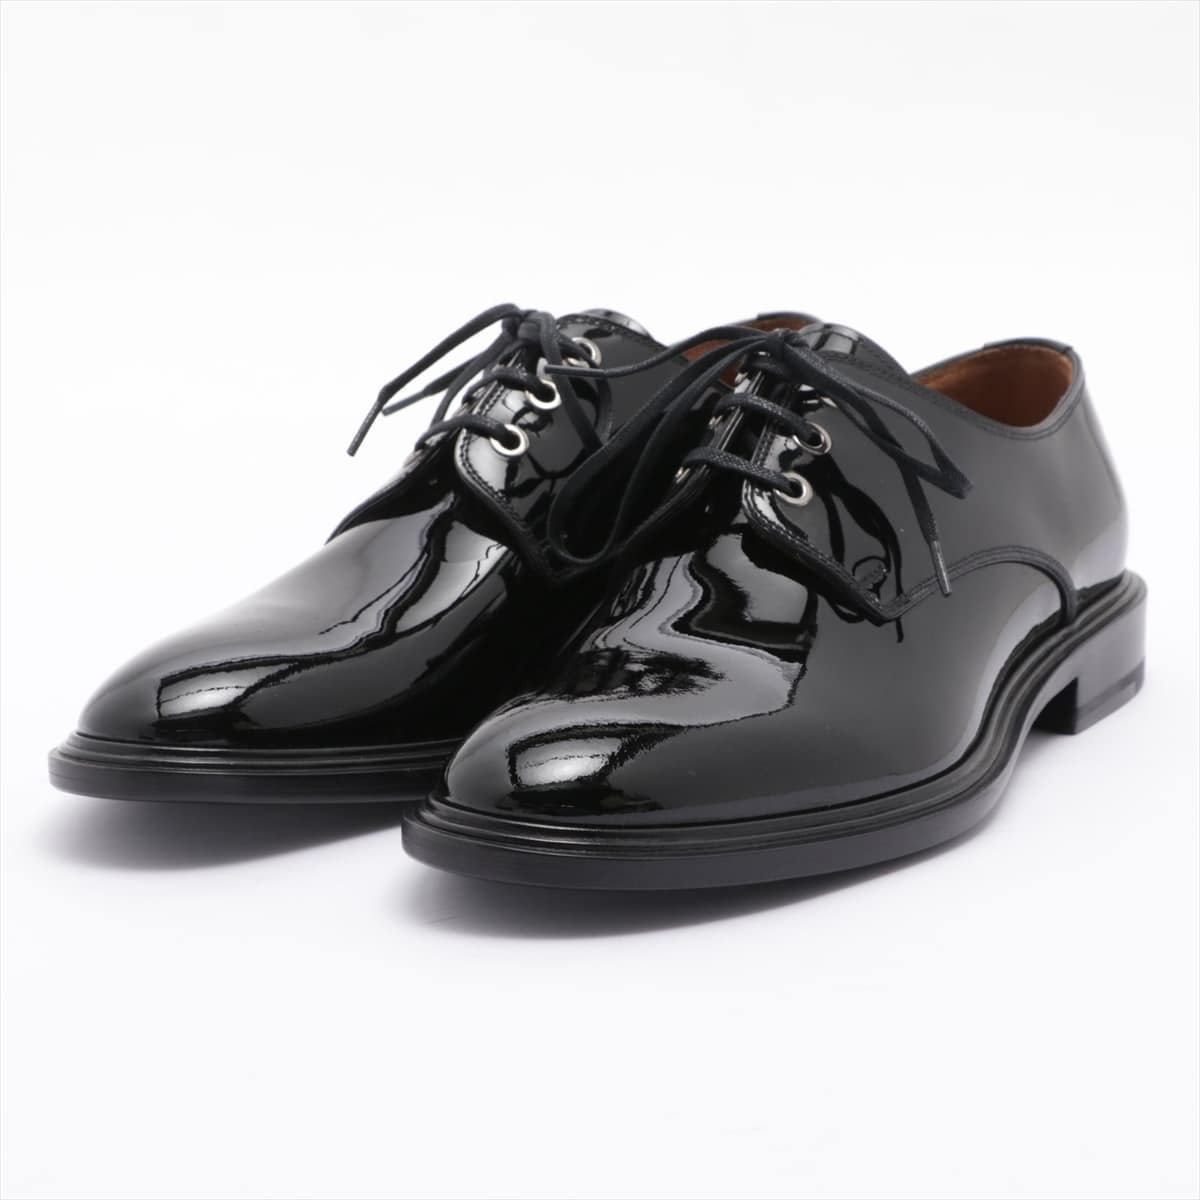 Givenchy Patent leather Leather shoes 40 1/2 Men's Black BM08050